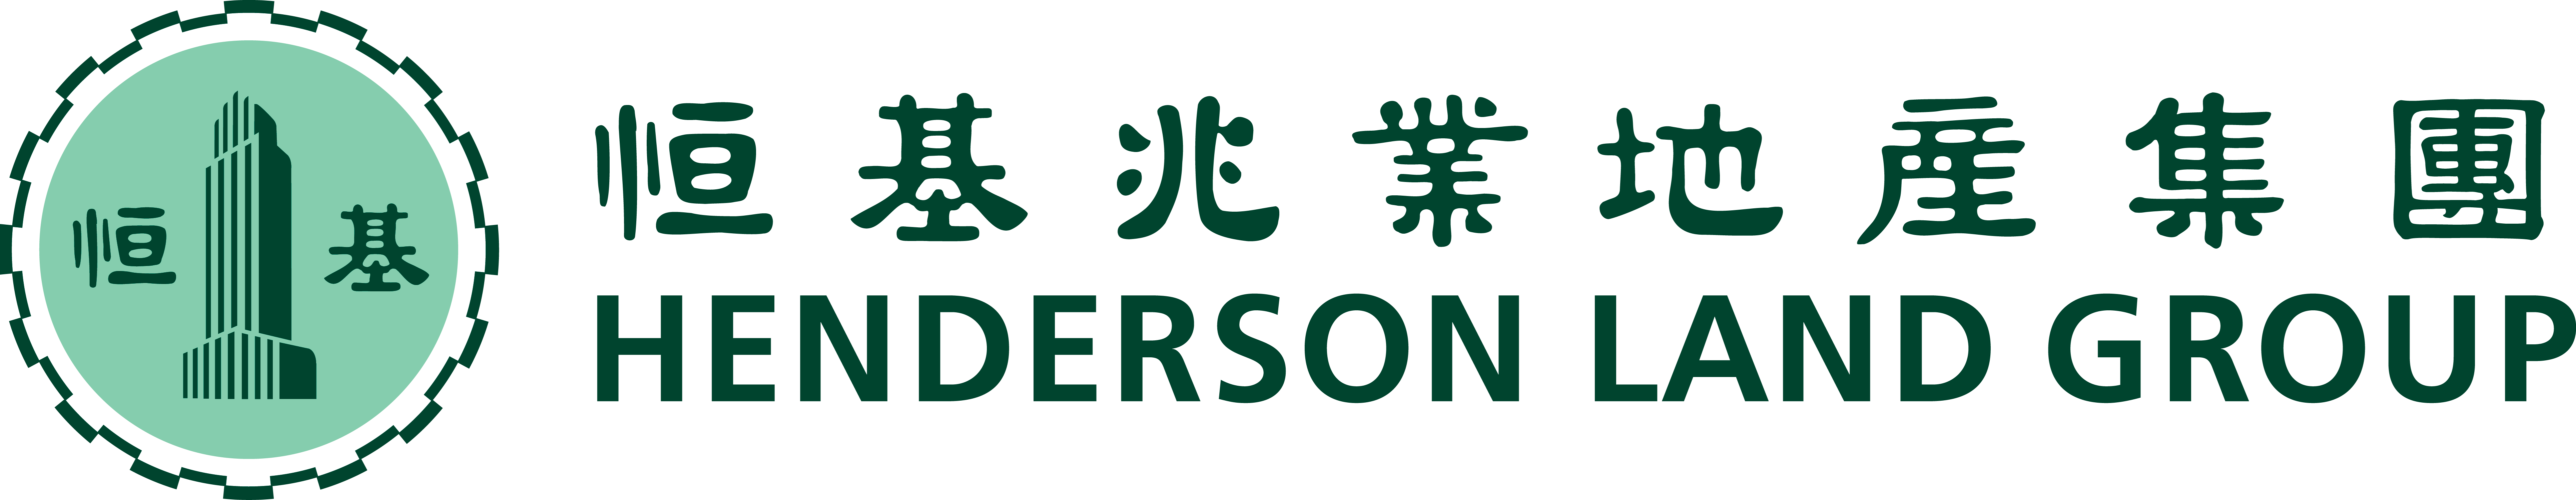 Henderson Land Group Logo